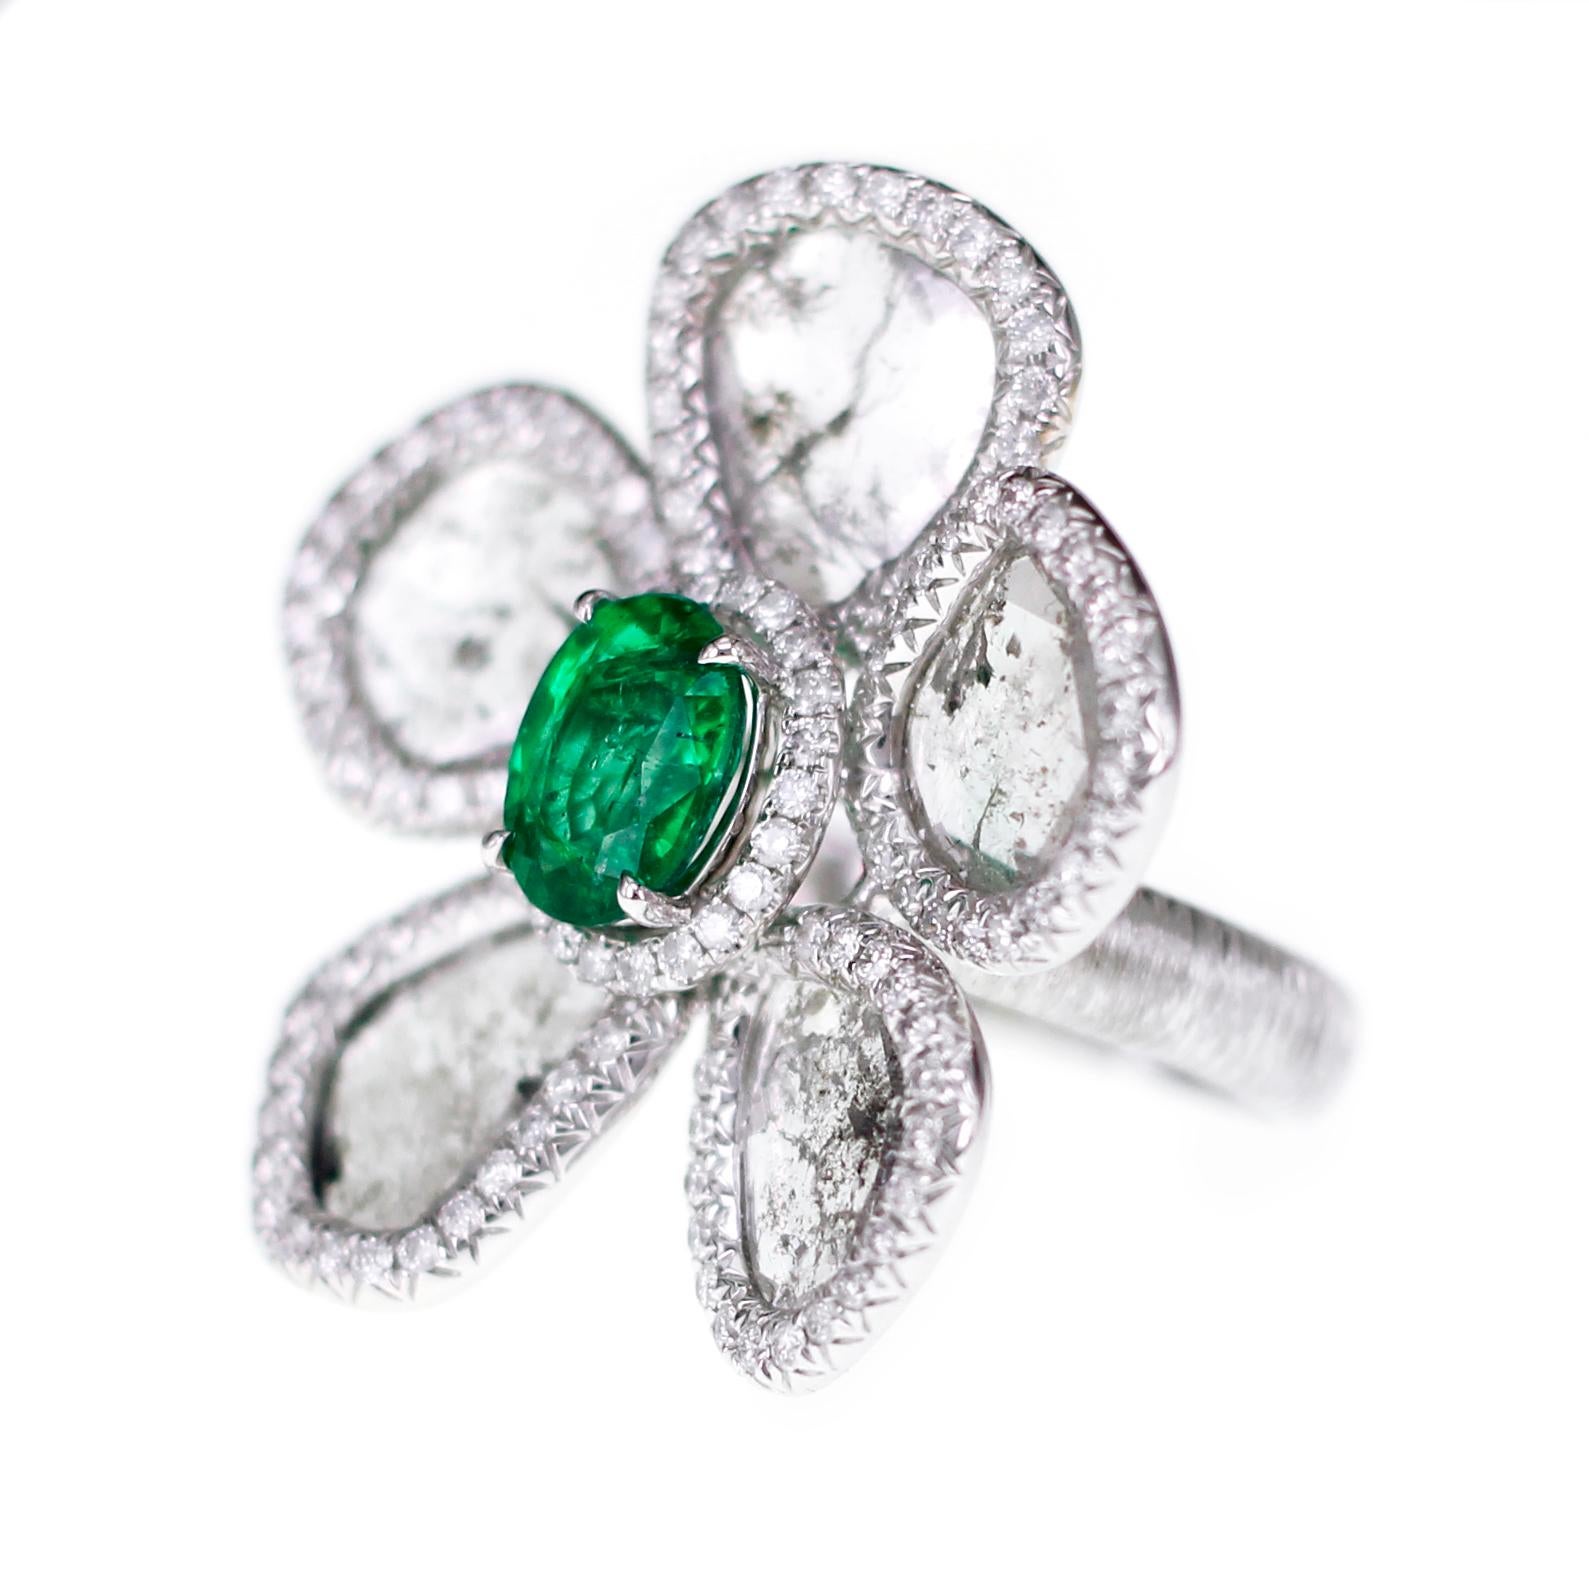 Modernist Vivid Green Zambian Emerald with Salt and Pepper Slice Diamond